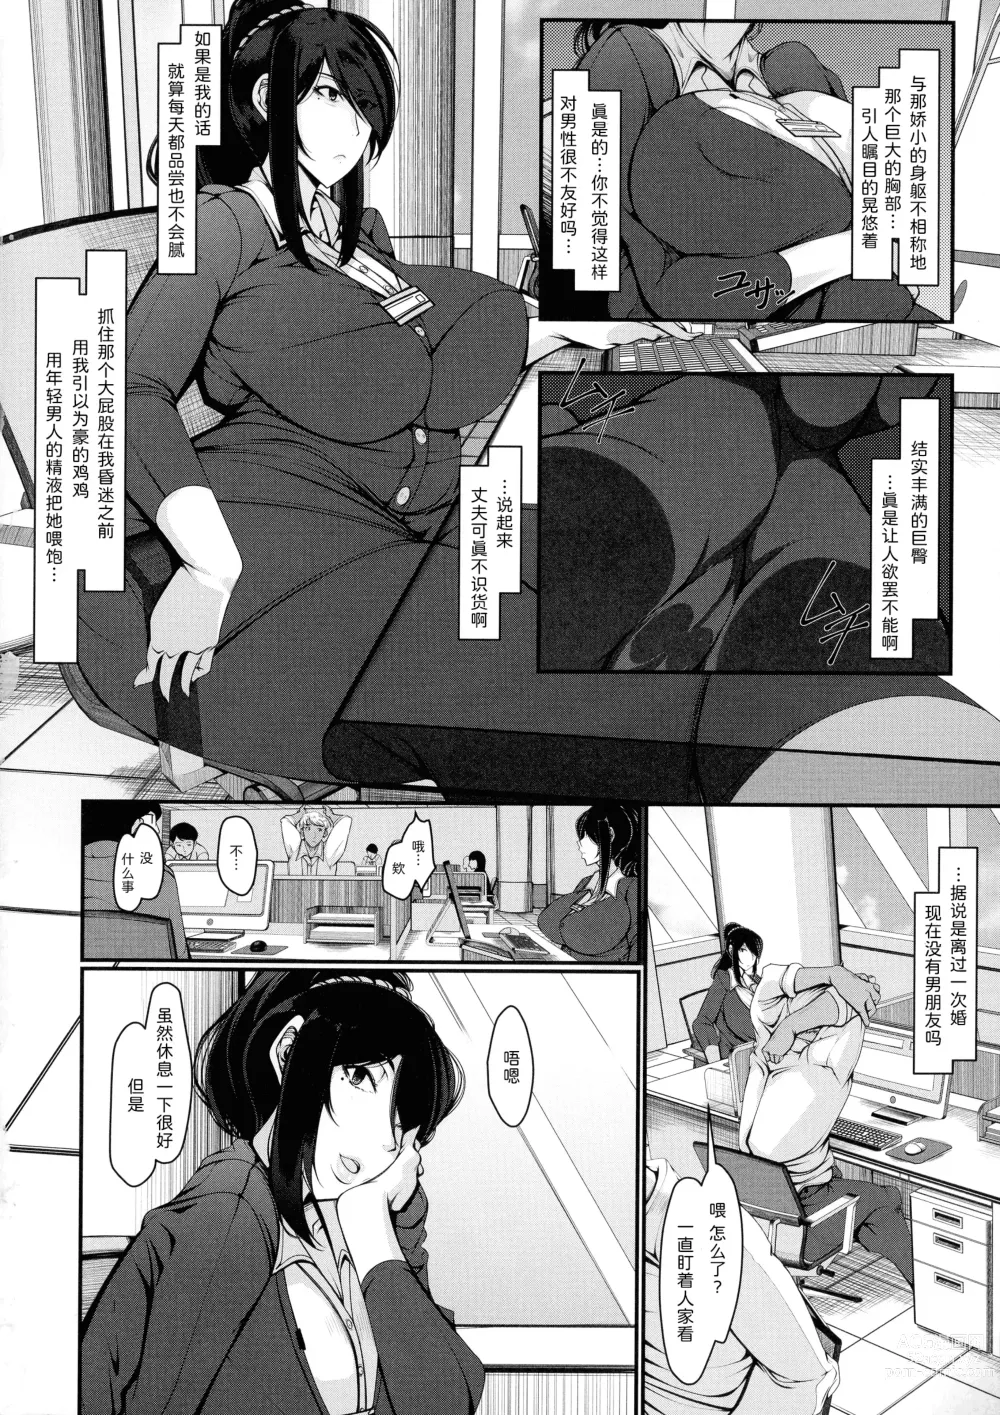 Page 3 of manga Barikyari Onna Joshi Mama Iyashino Recreation